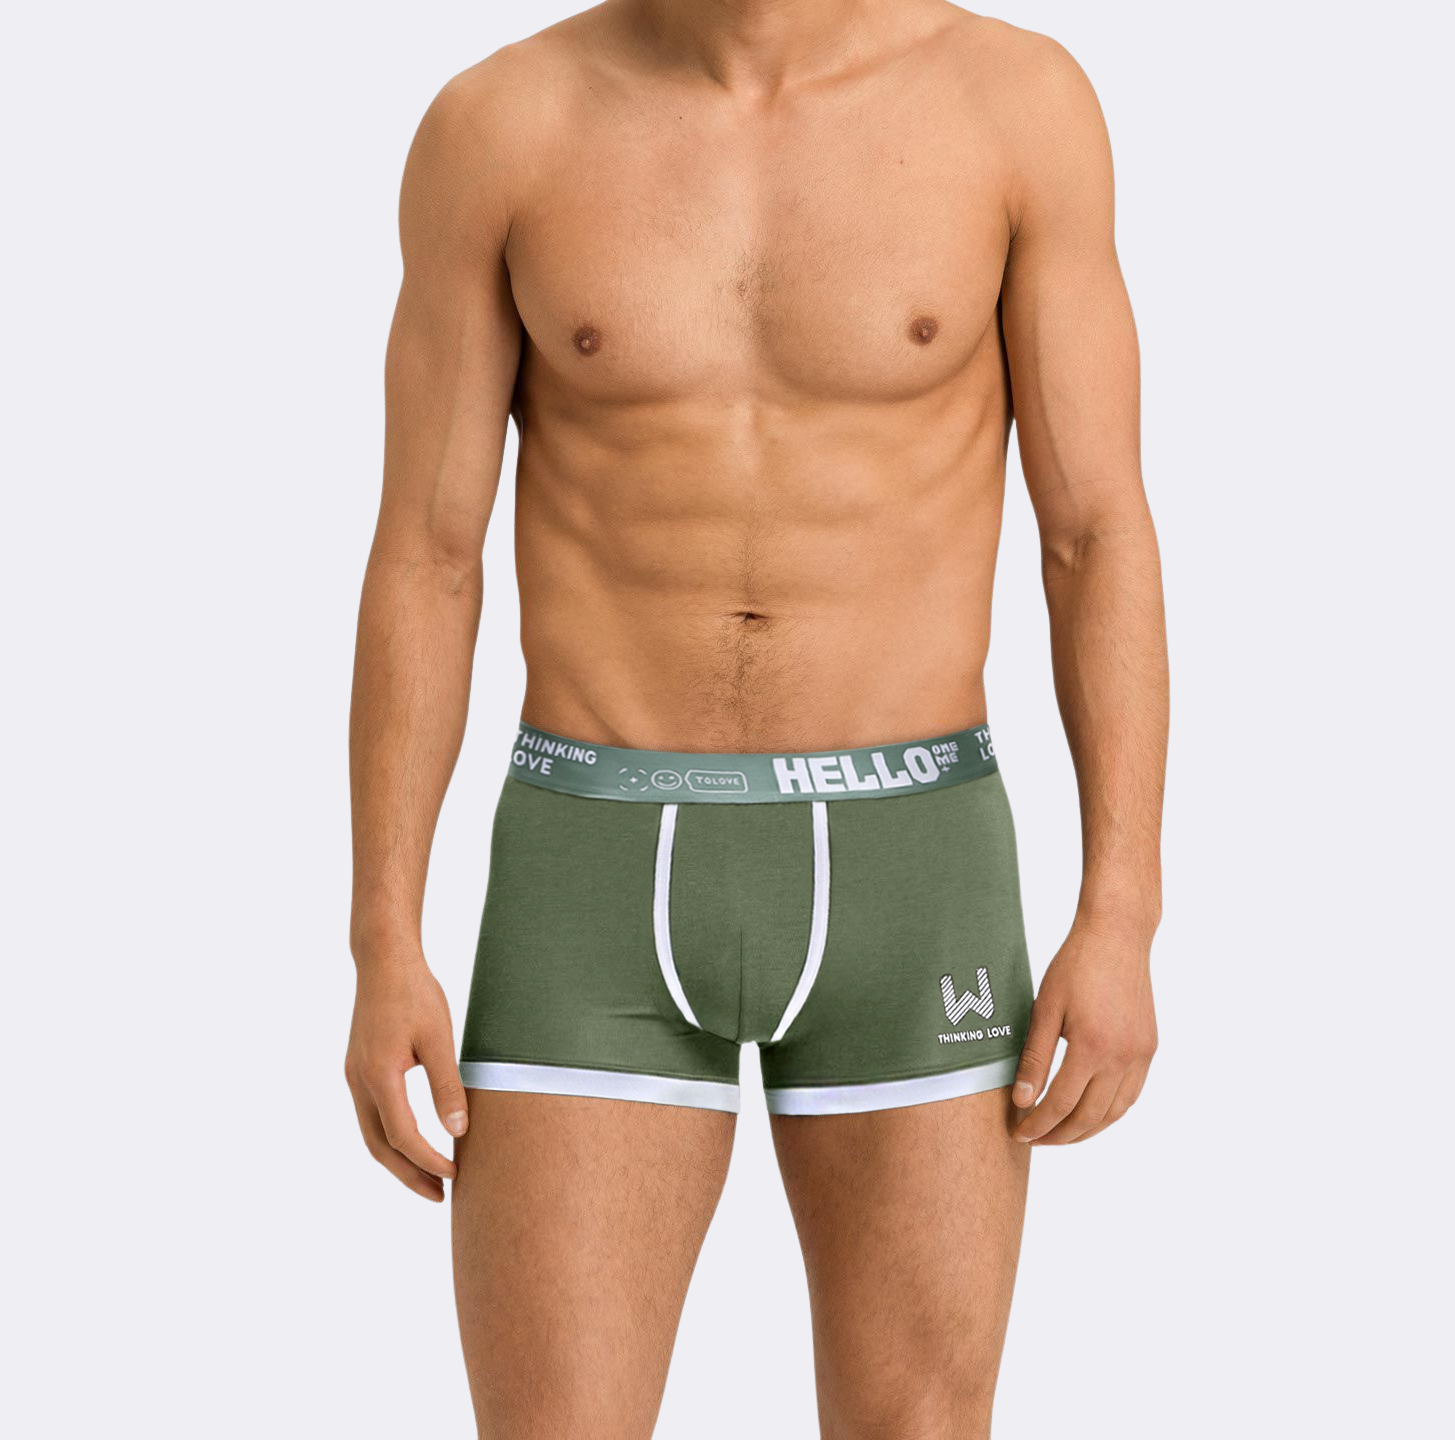 HELLO™ Classic - Men's Underwear